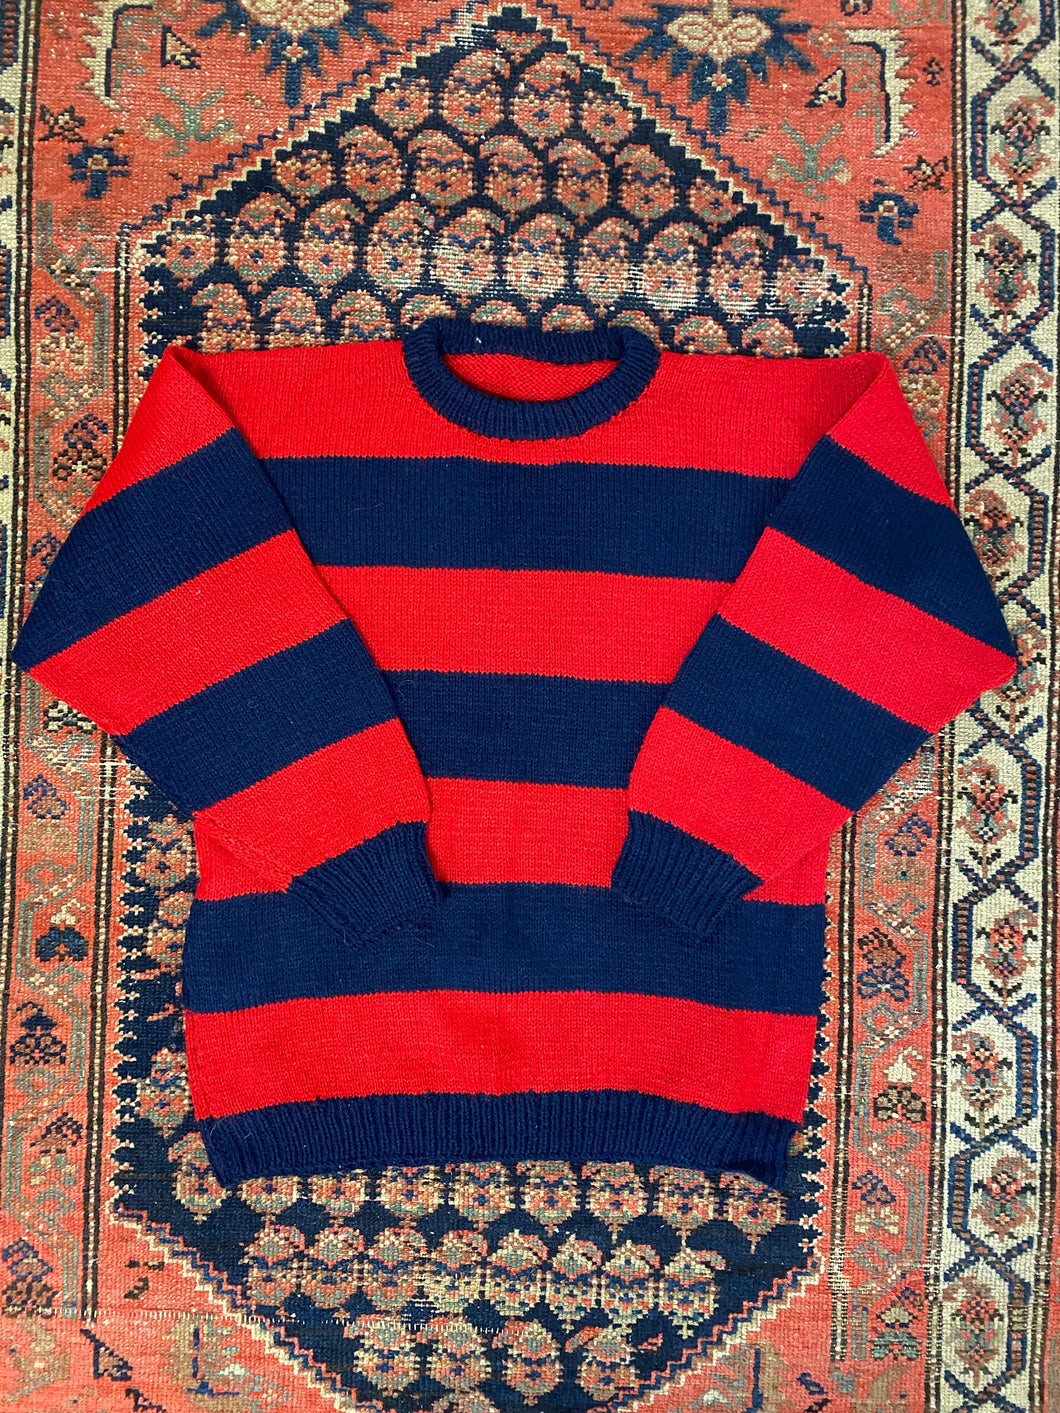 90s Striped Knit - S